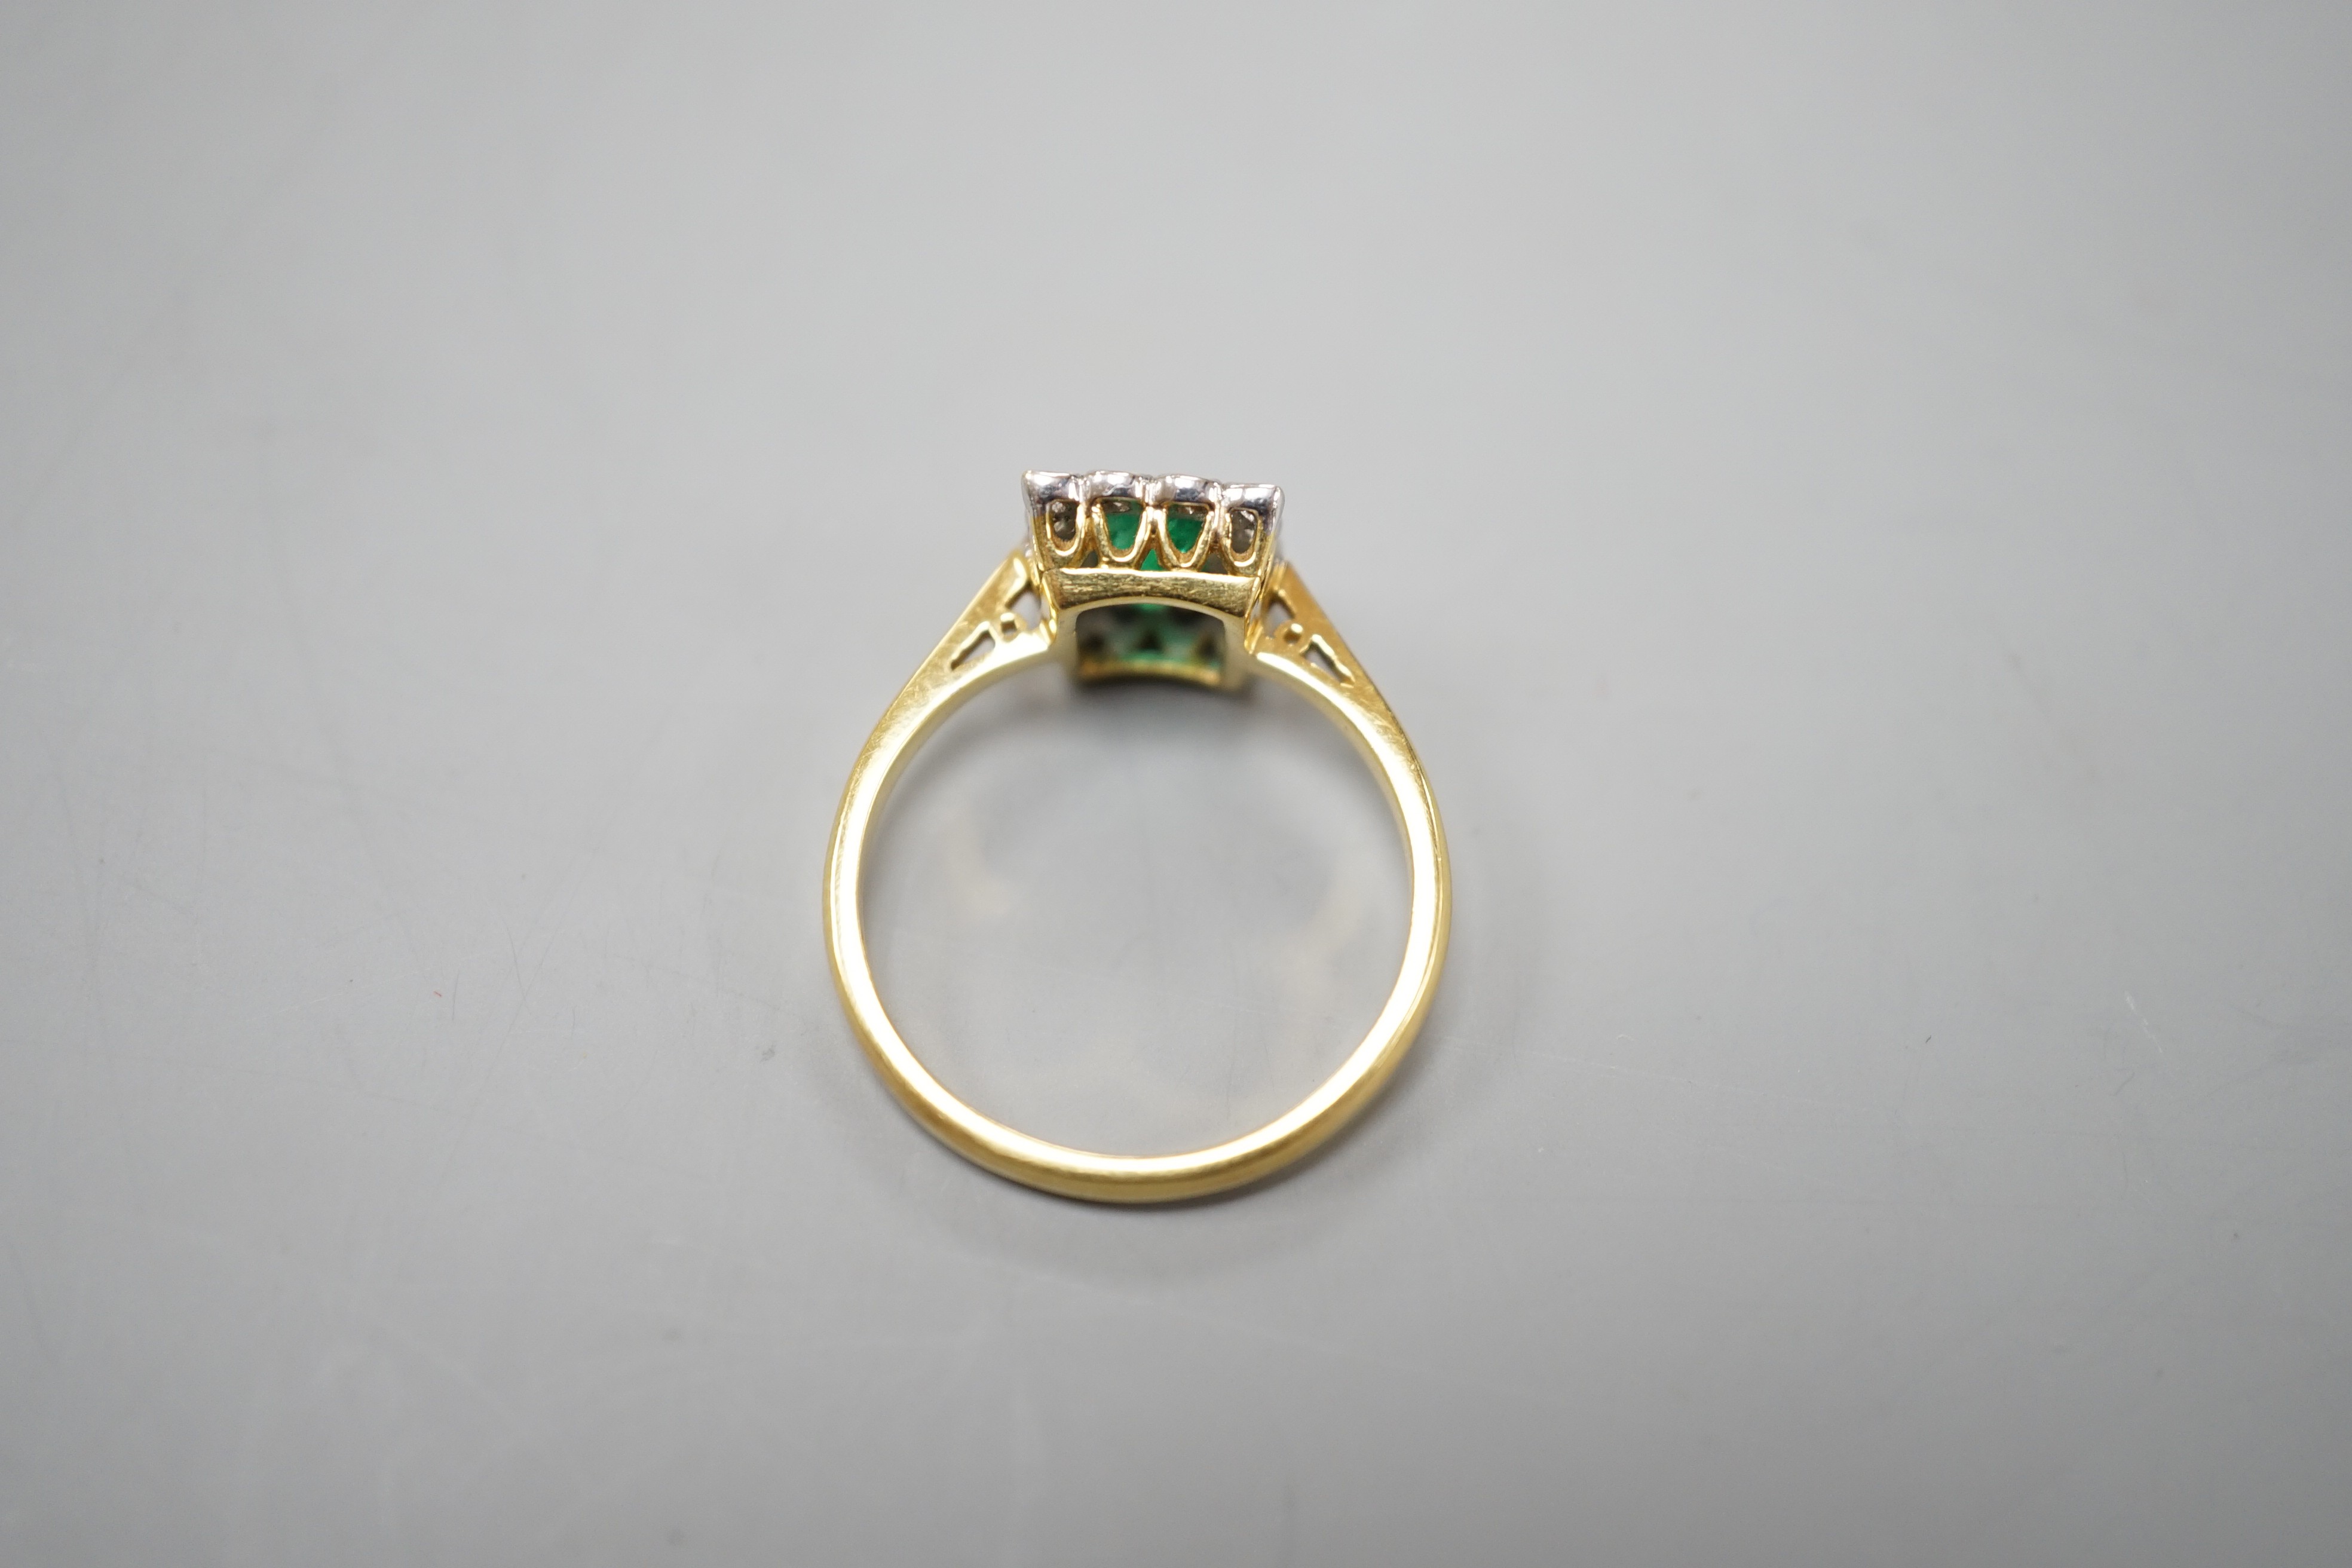 A modern 18ct gold, emerald and diamond set rectangular cluster ring, size N, gross weight 3.4 grams